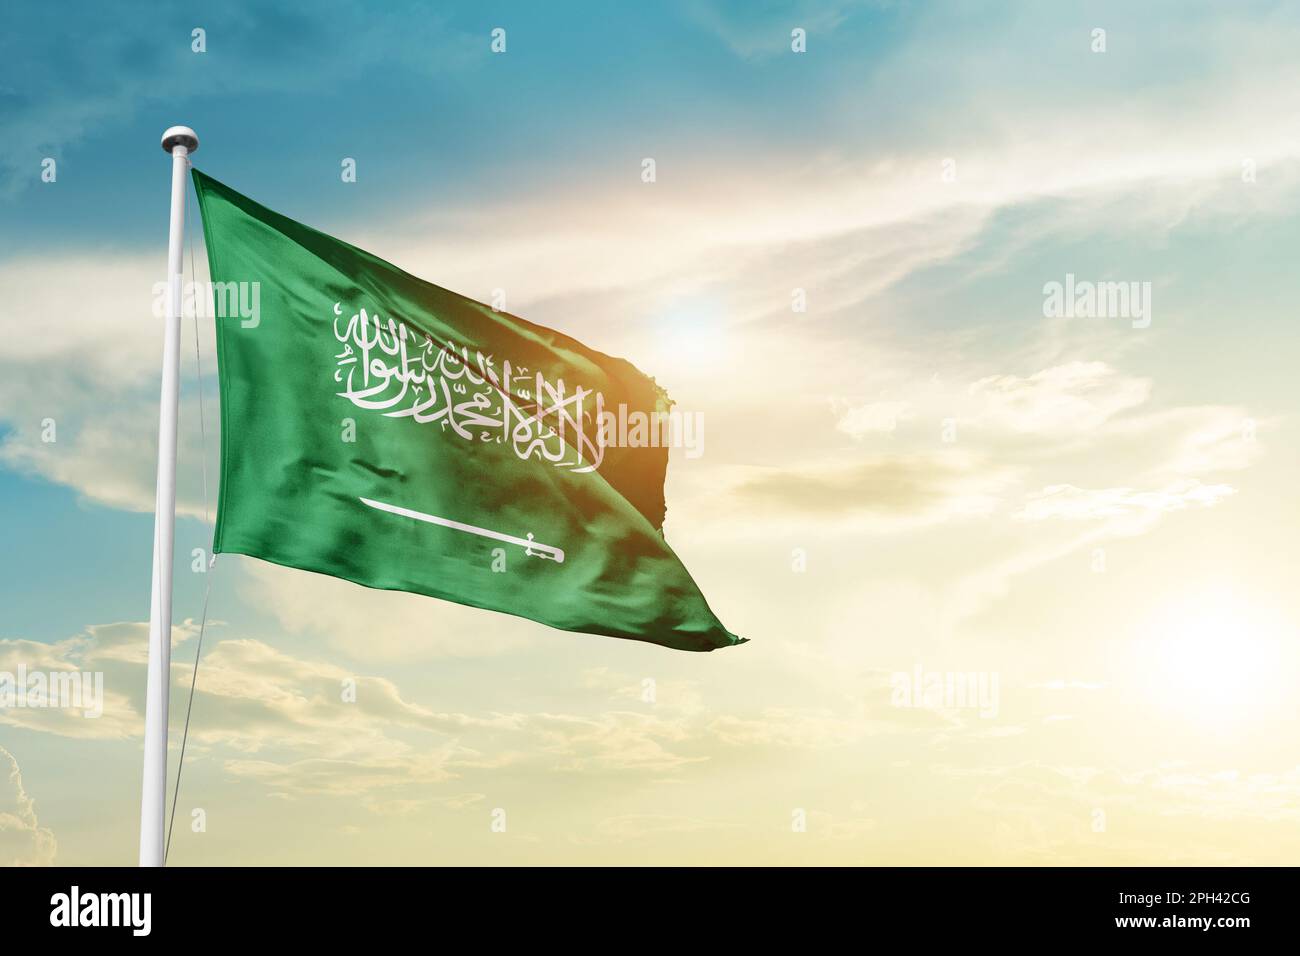 Saudi Arabia national flag waving. Stock Photo